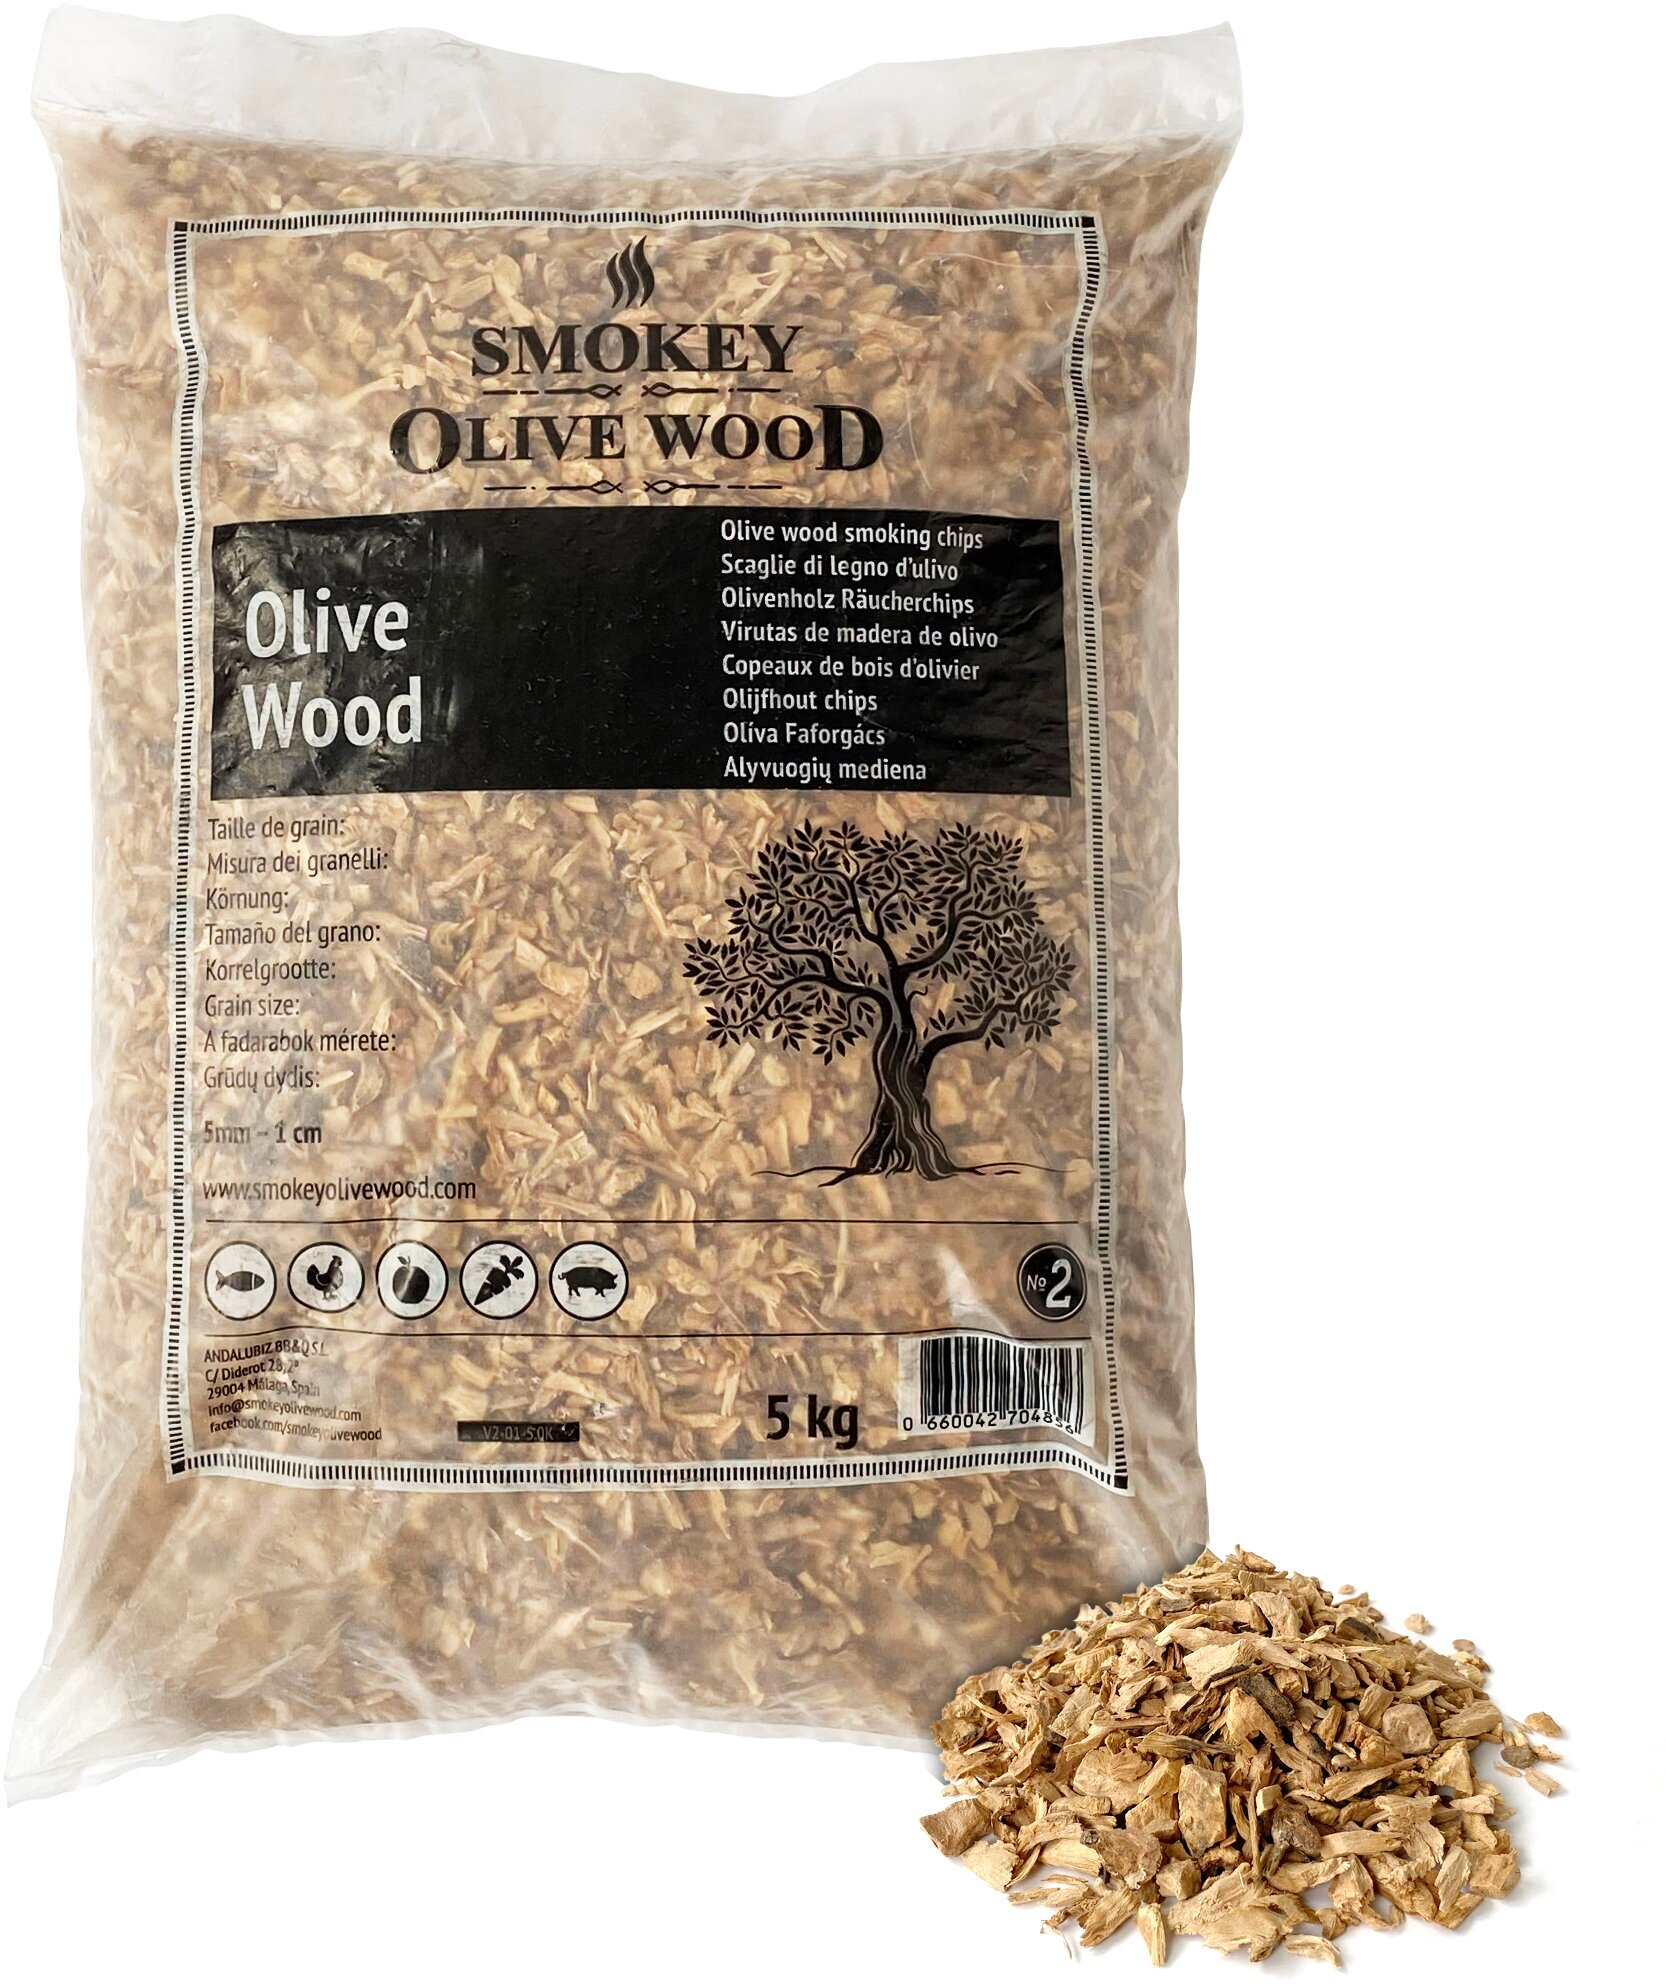 Щепа для копчения "Олива" (Smokey Olive Wood), мешок 5 кг, фракция от 5 до 10мм. - фотография № 1